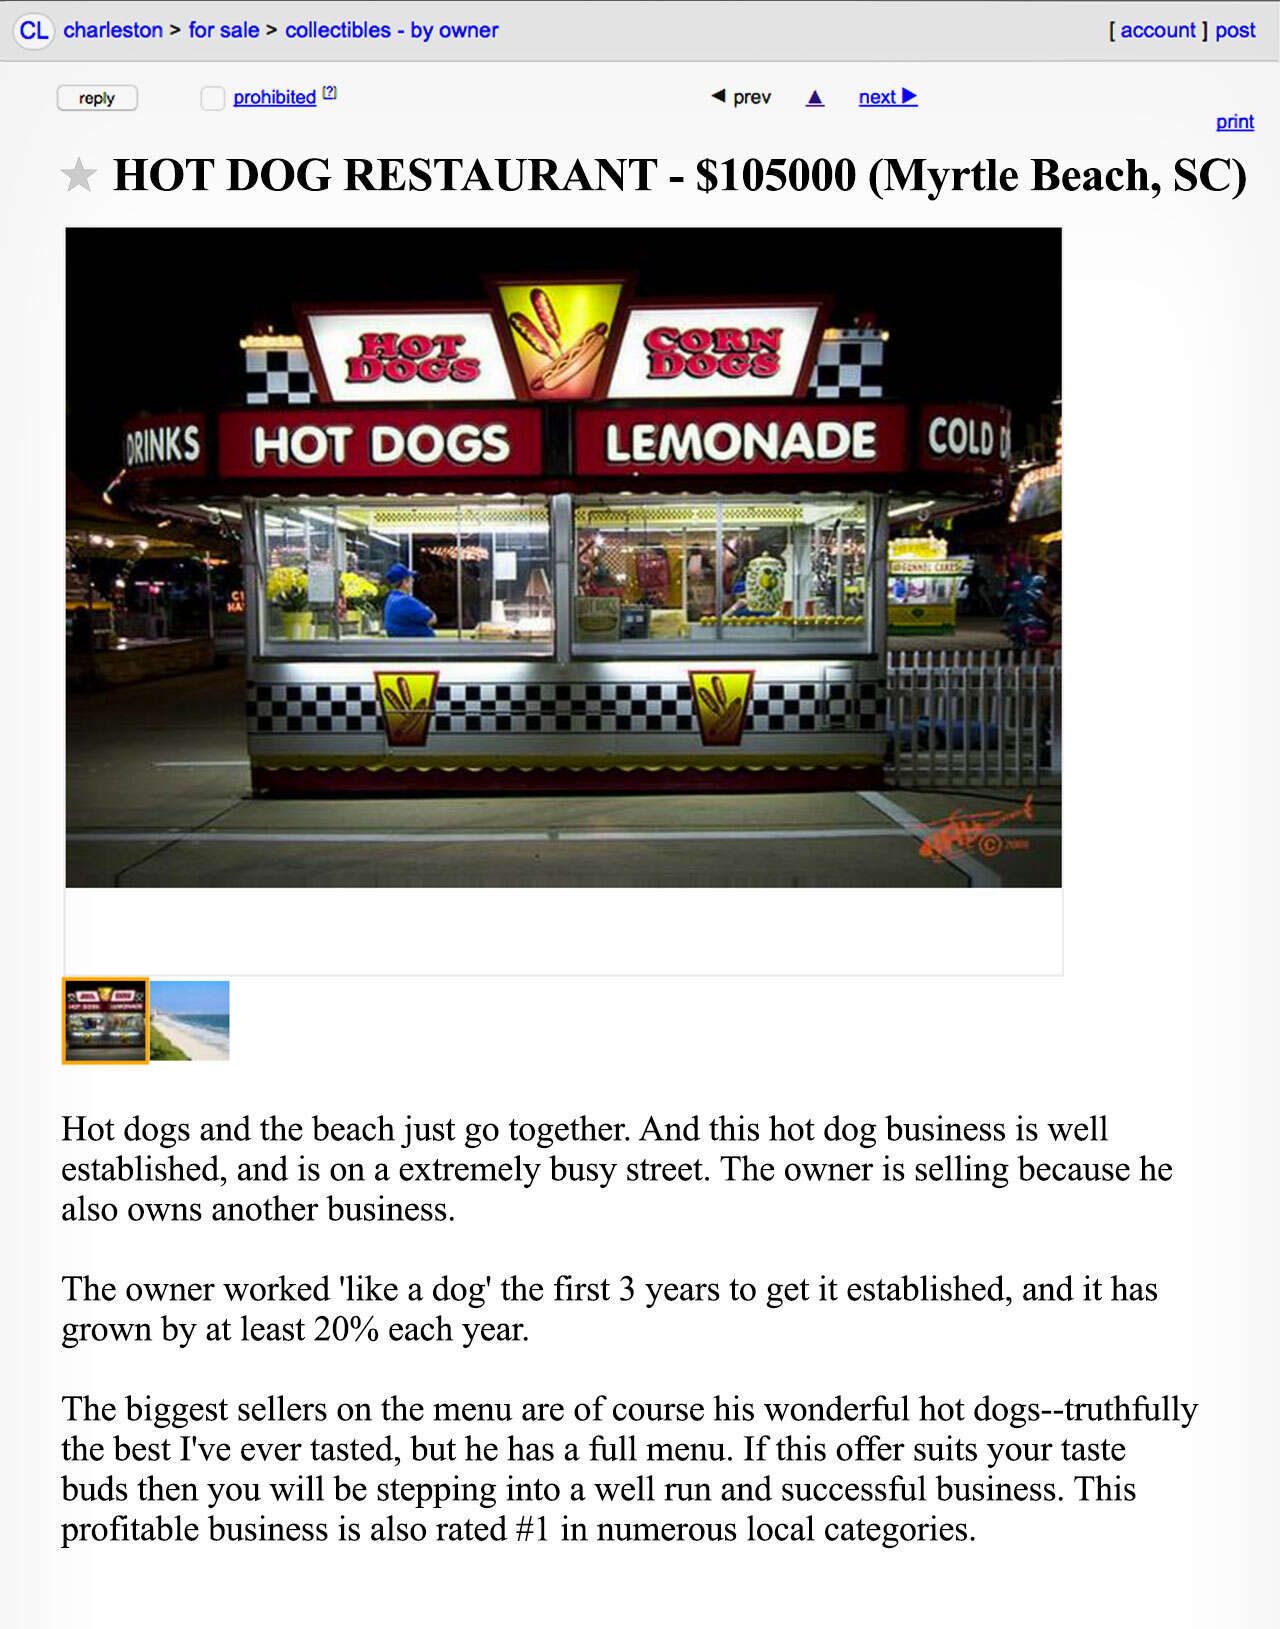 A Craigslist advertisement for a hot dog restaurant.